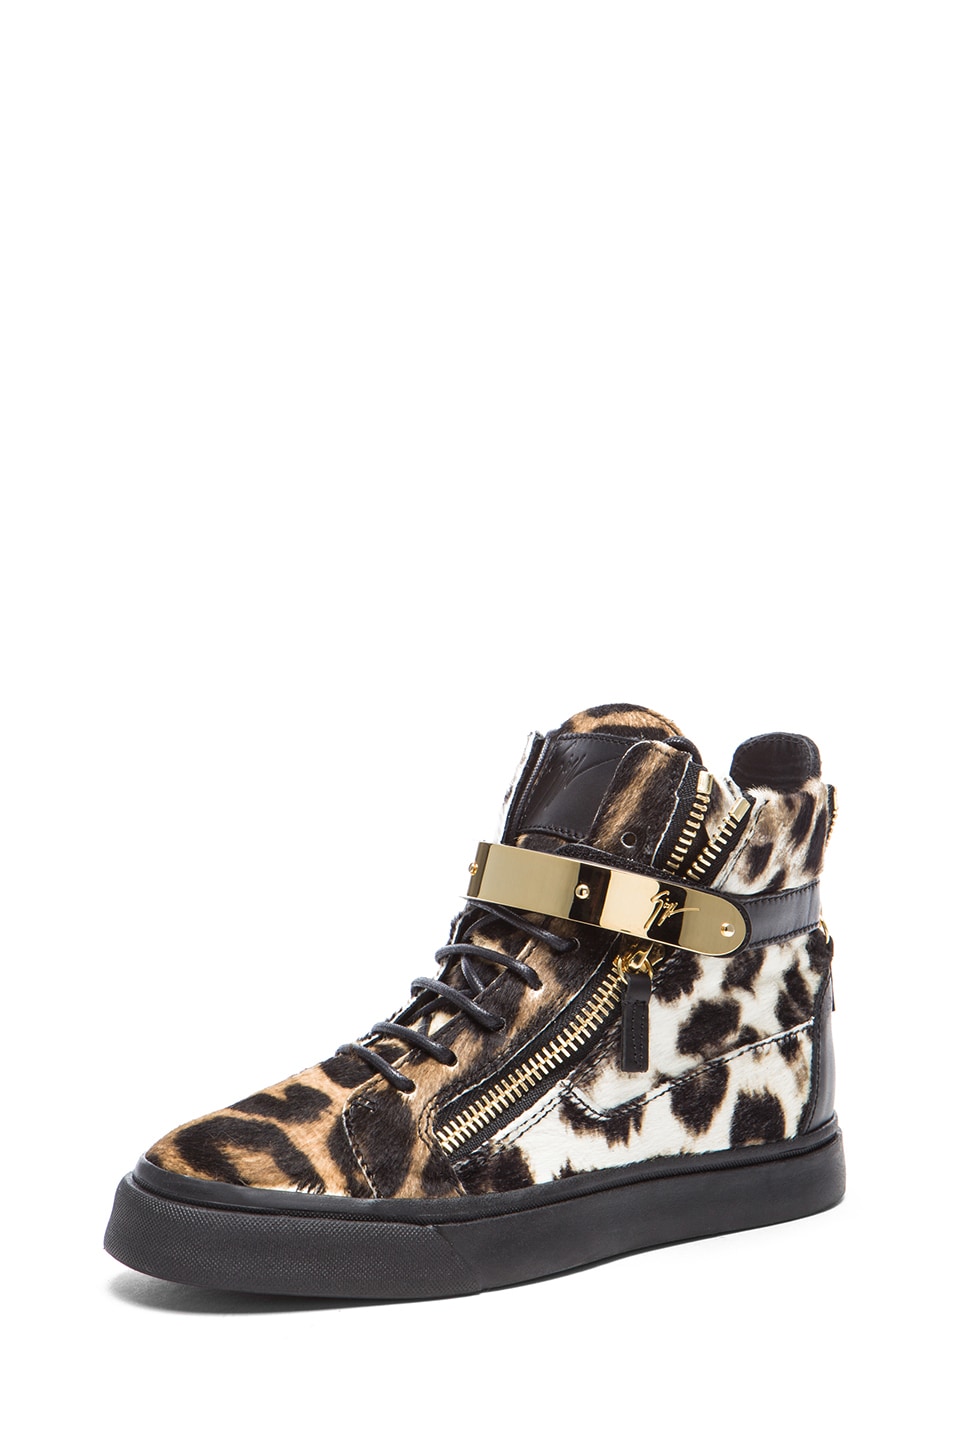 Giuseppe Zanotti High Top Calf Hair Sneakers in Leopard | FWRD